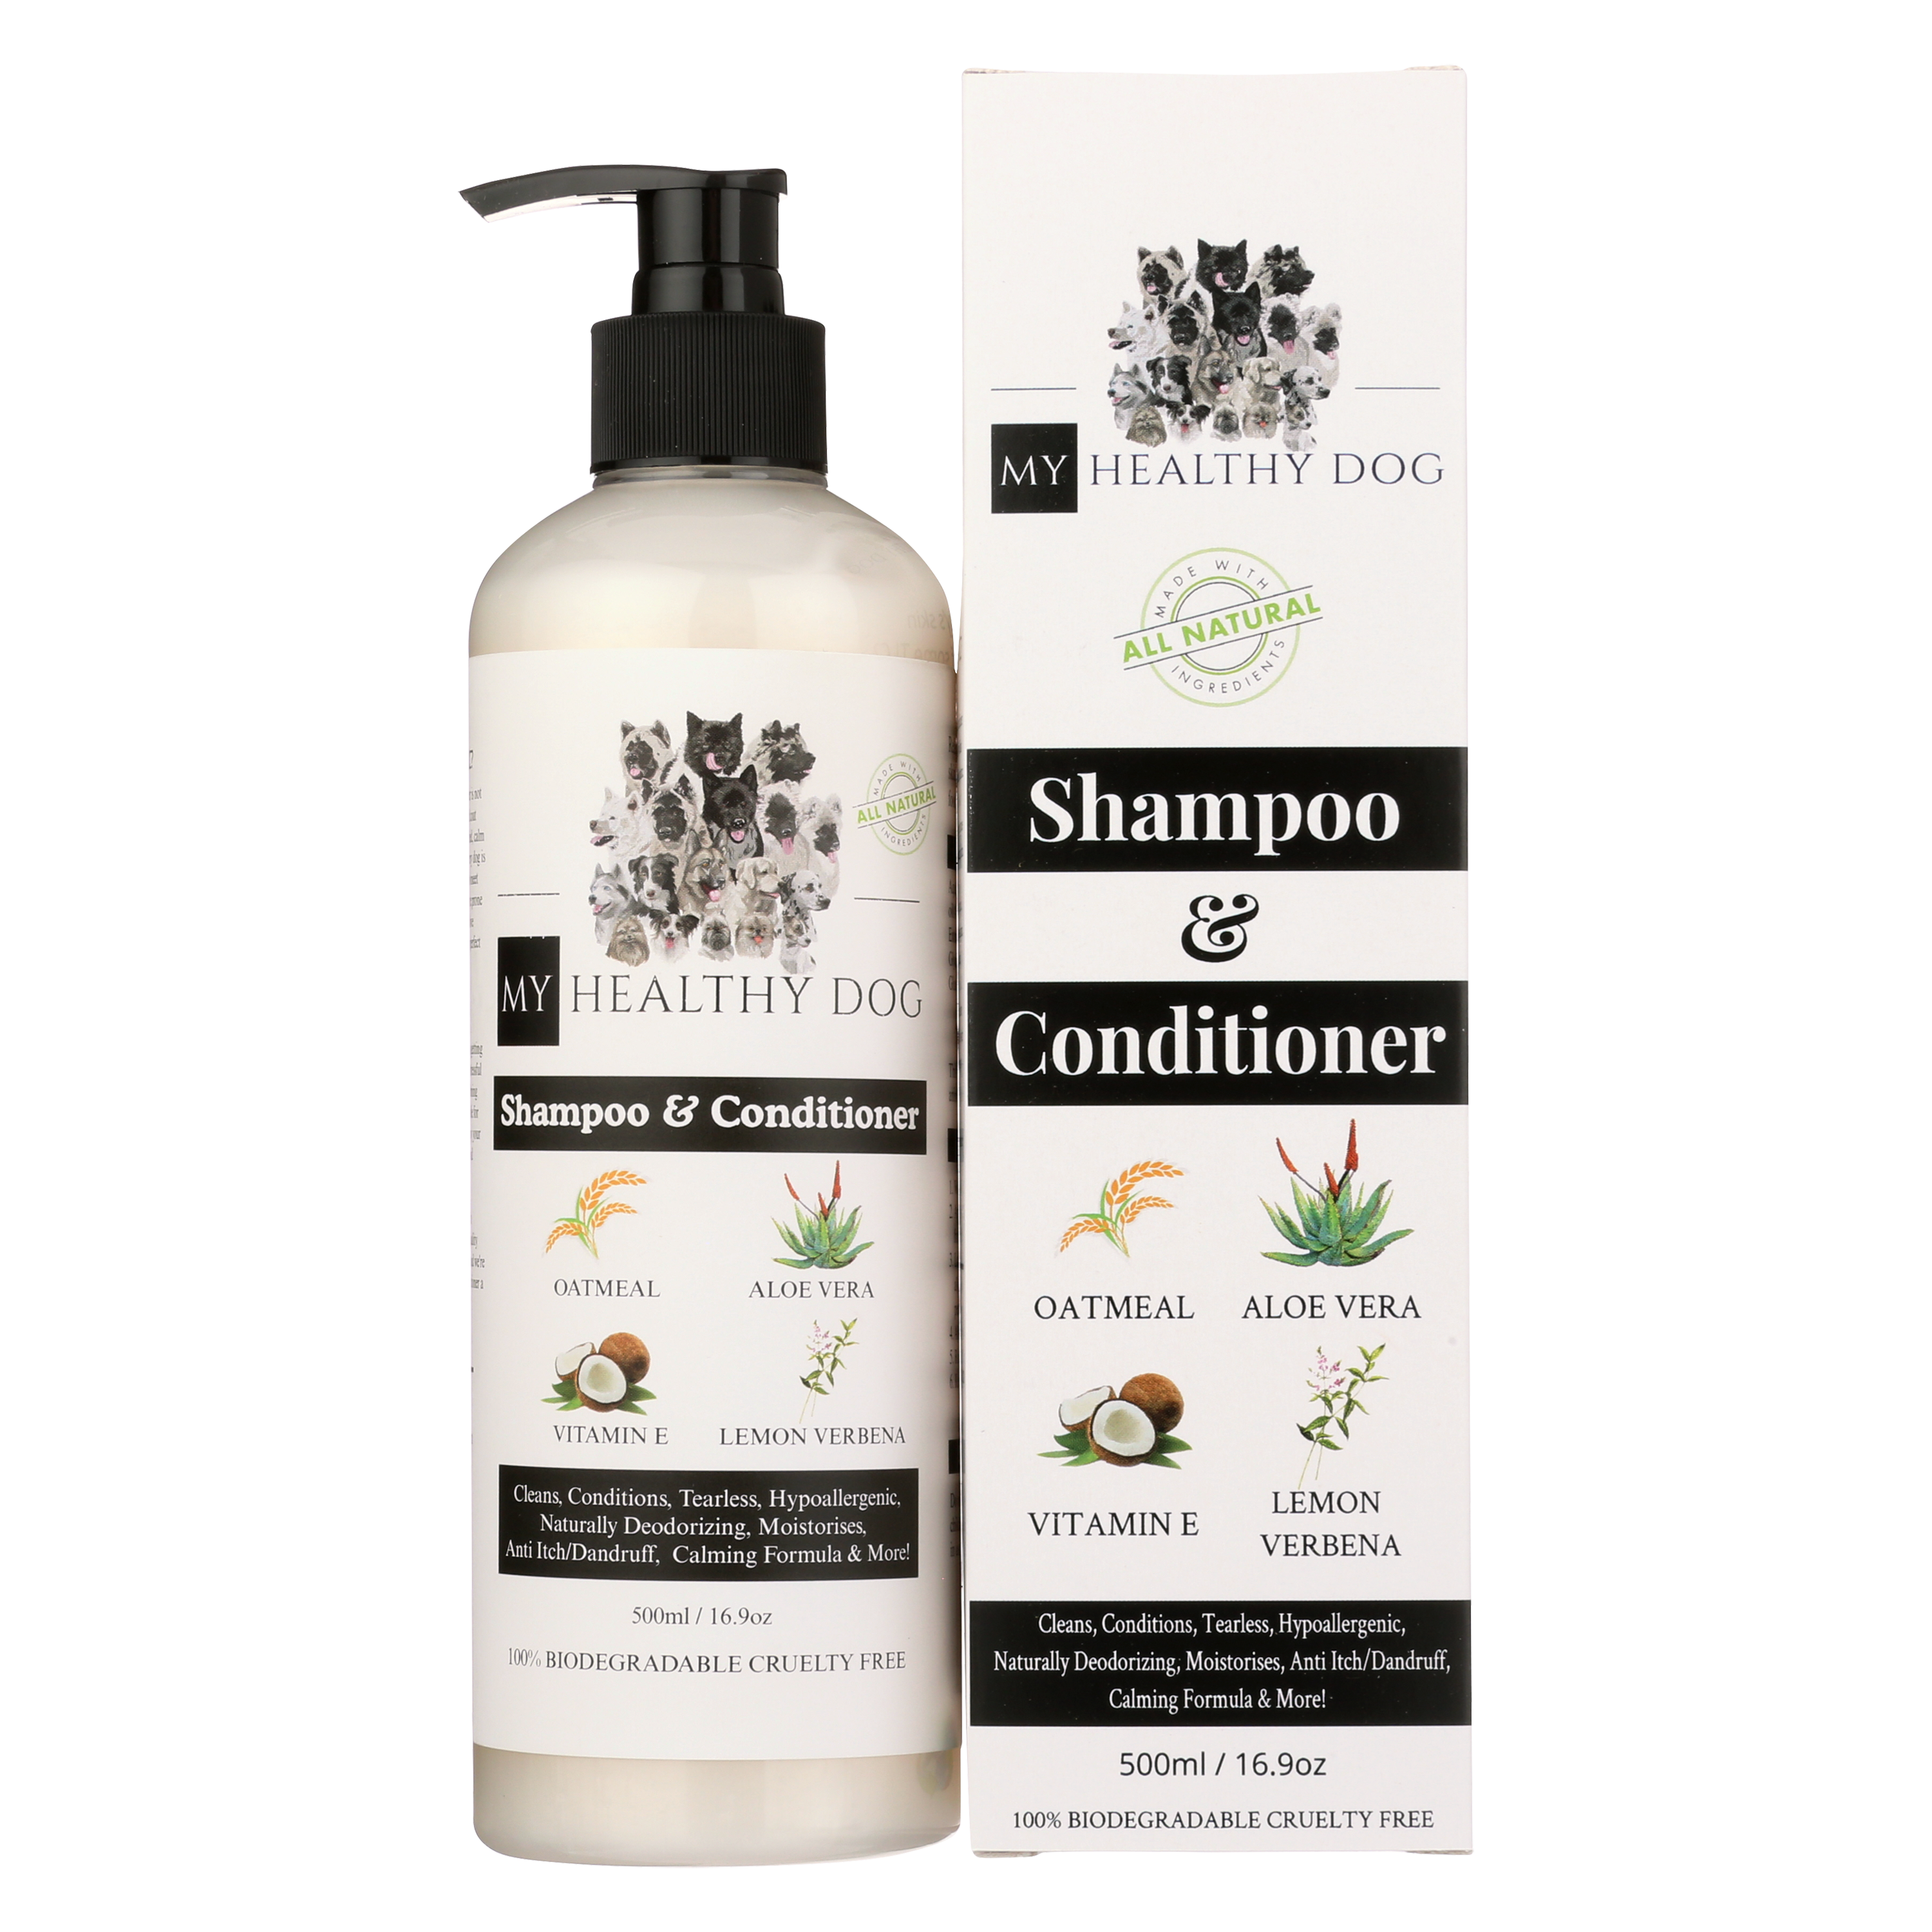 Dog Shampoo and Conditioner